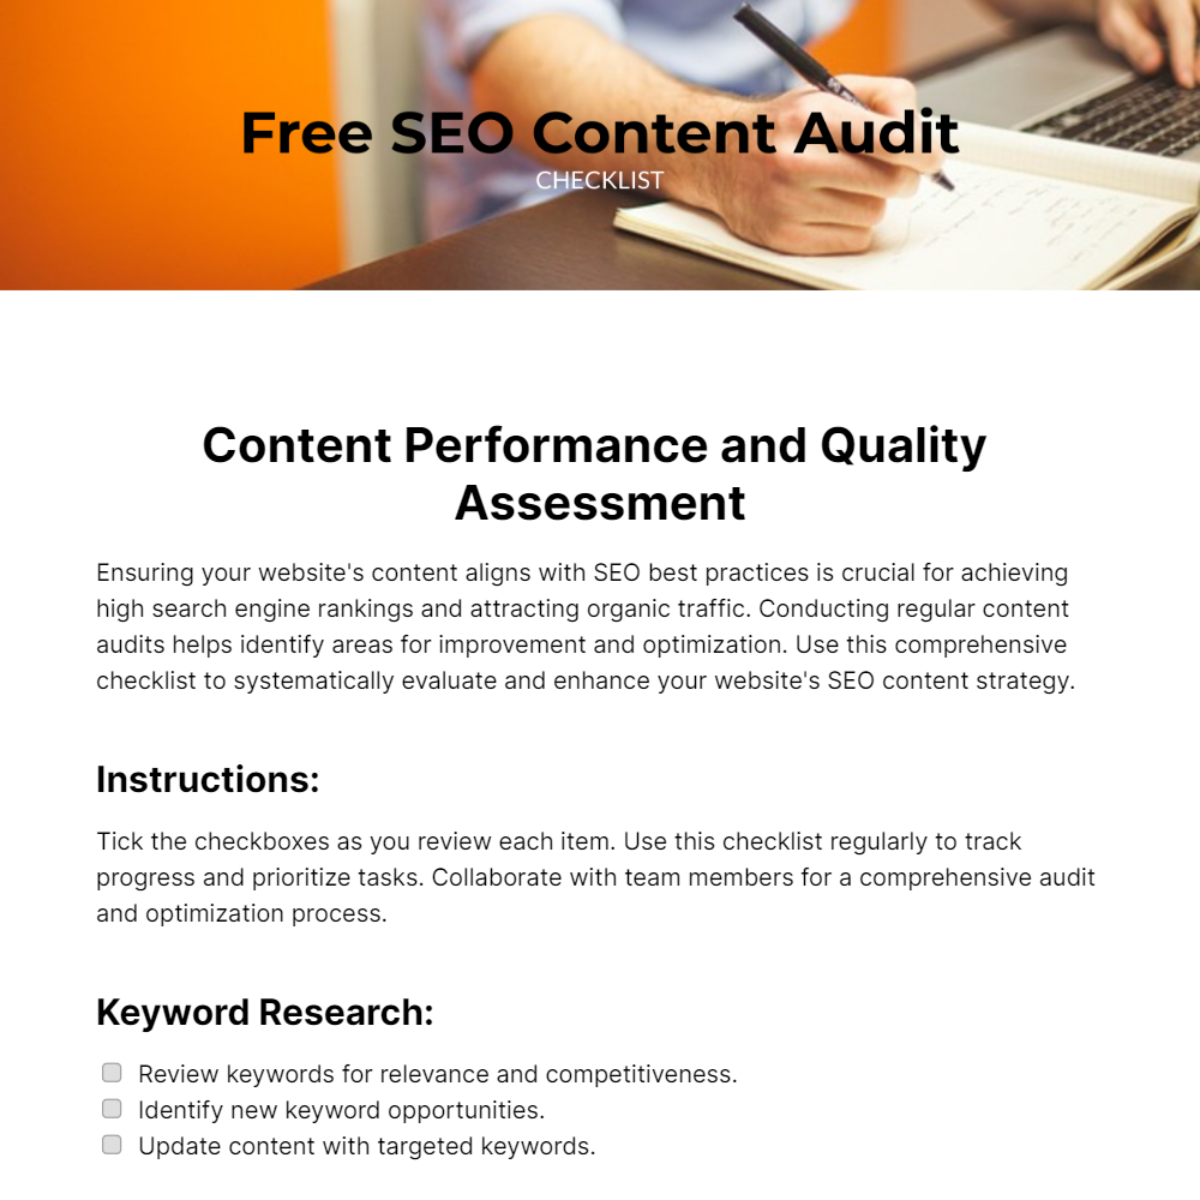 SEO Content Audit Checklist Template